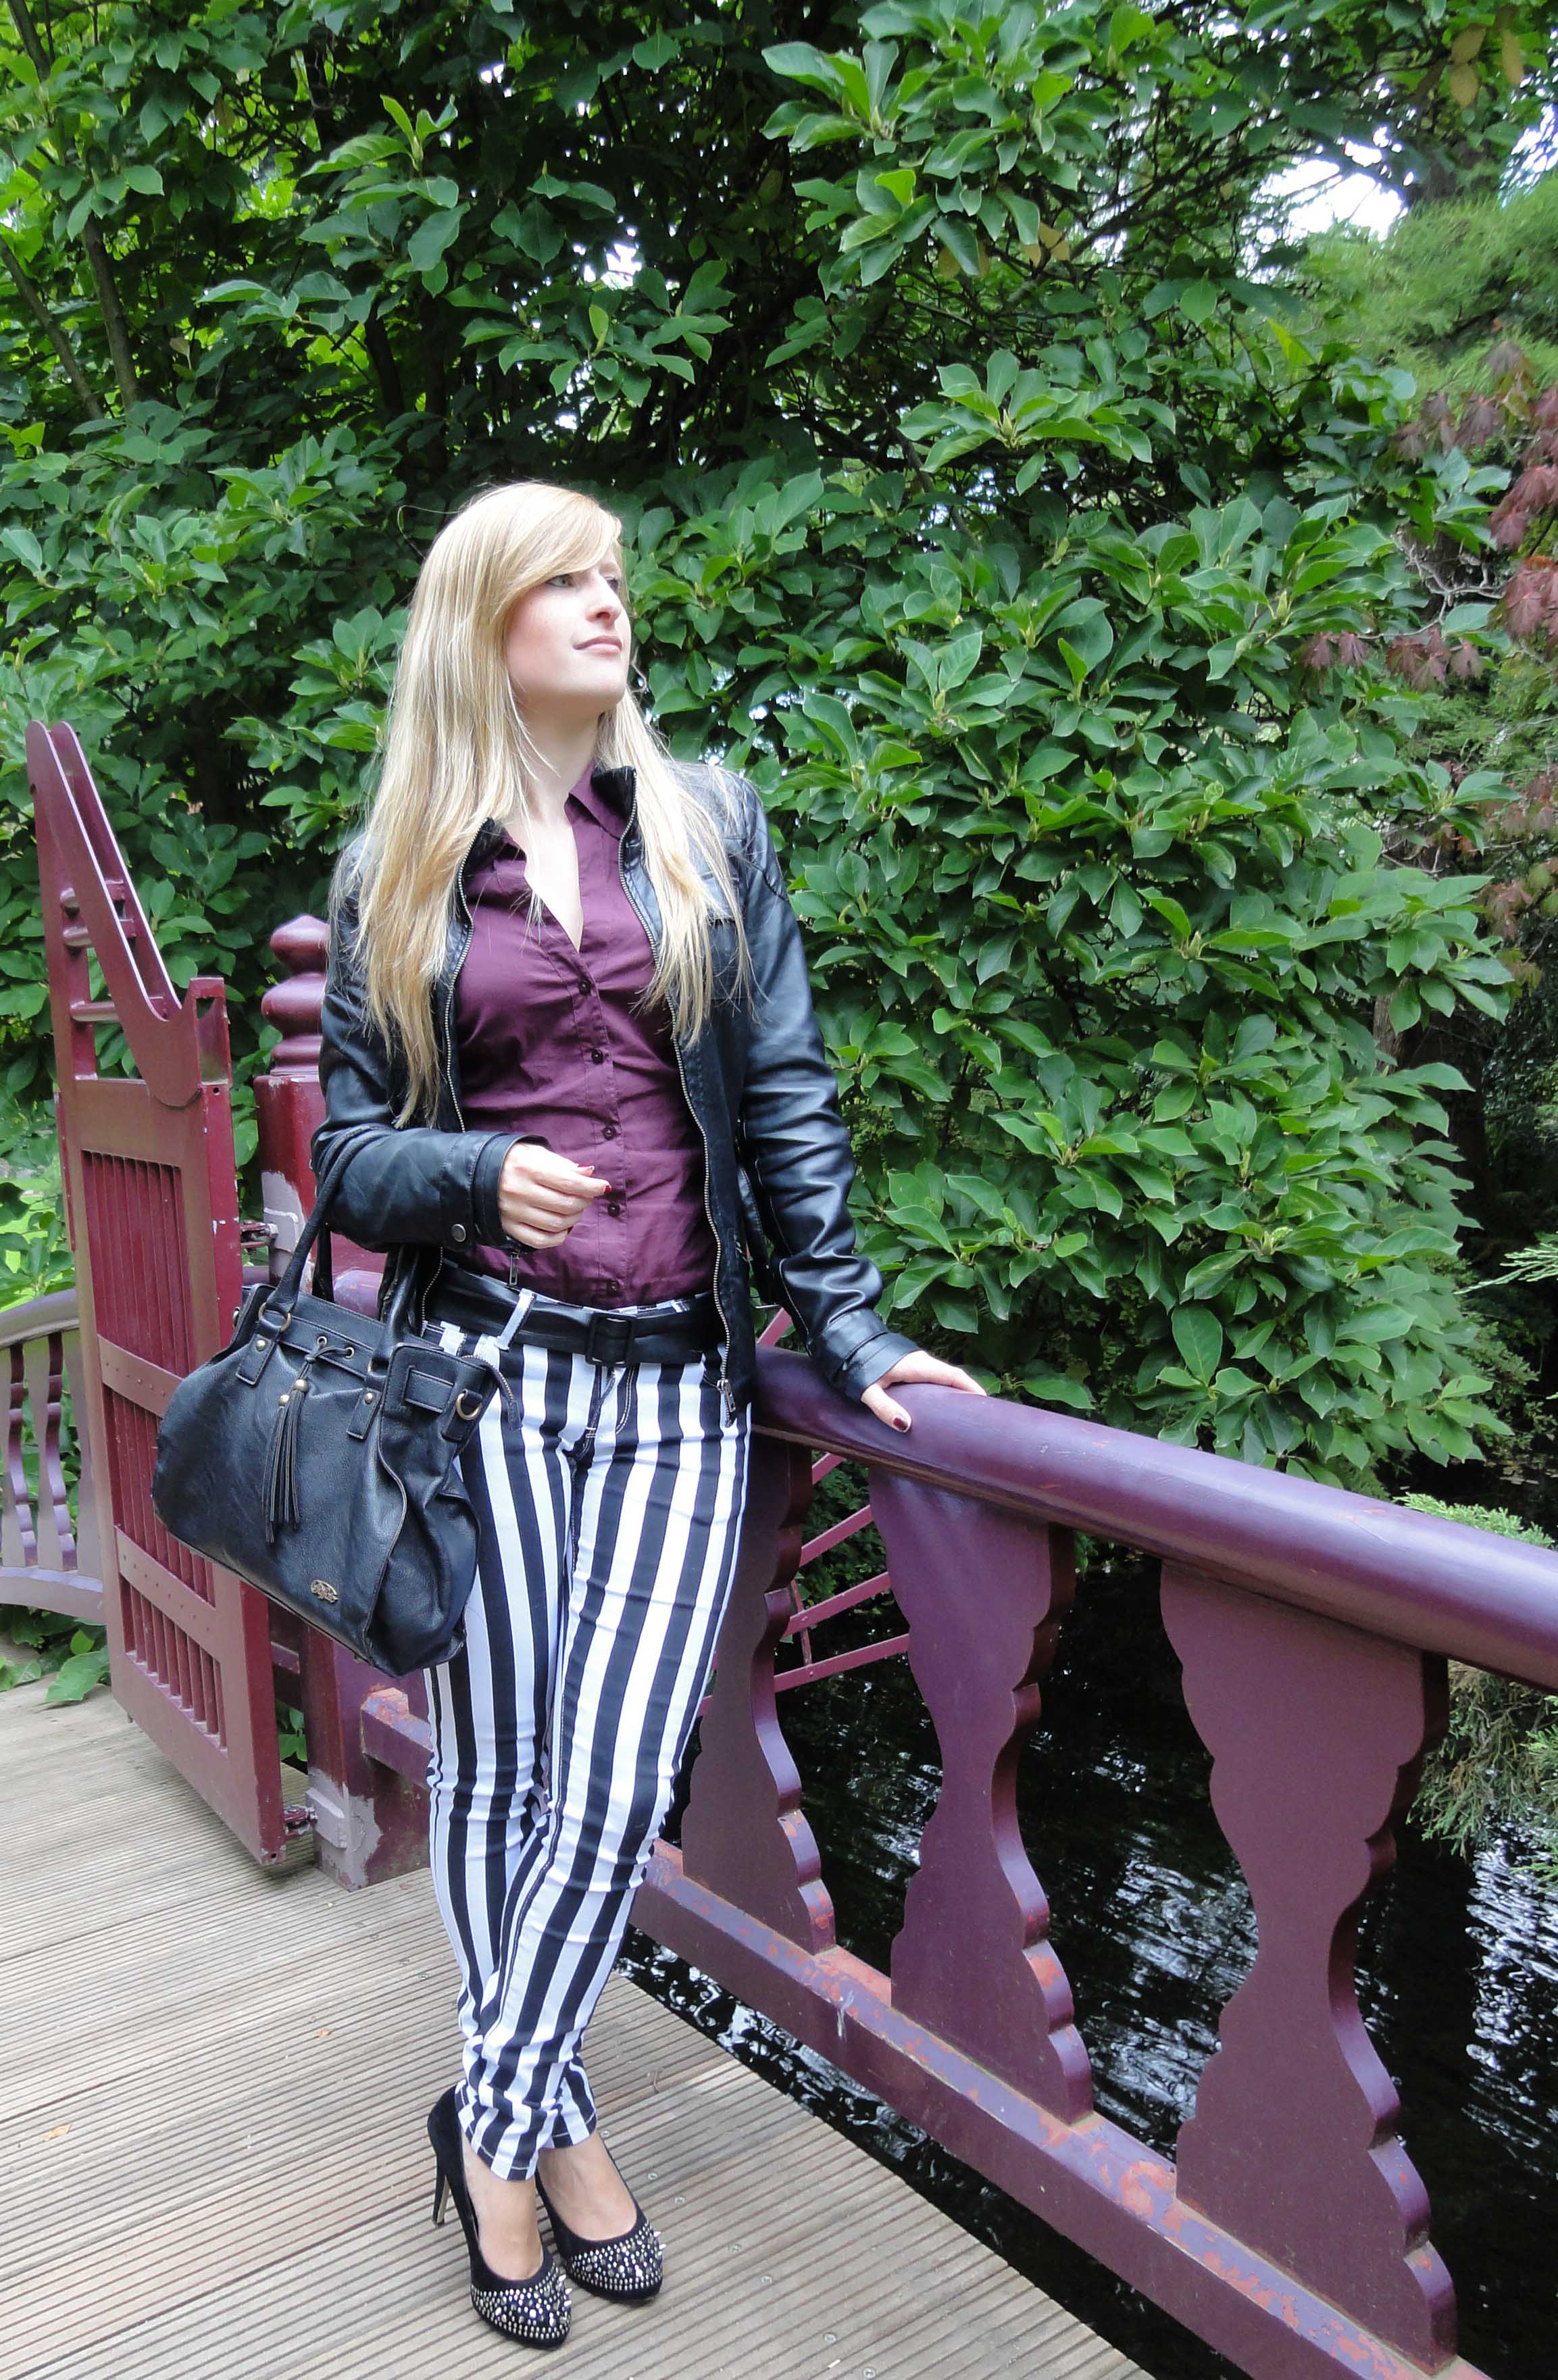 Stripes Rules Modeblog schwarz weiß gestreifte Hose kombinieren streifen Outfit schwarze Lederjacke jajpanischer Garten